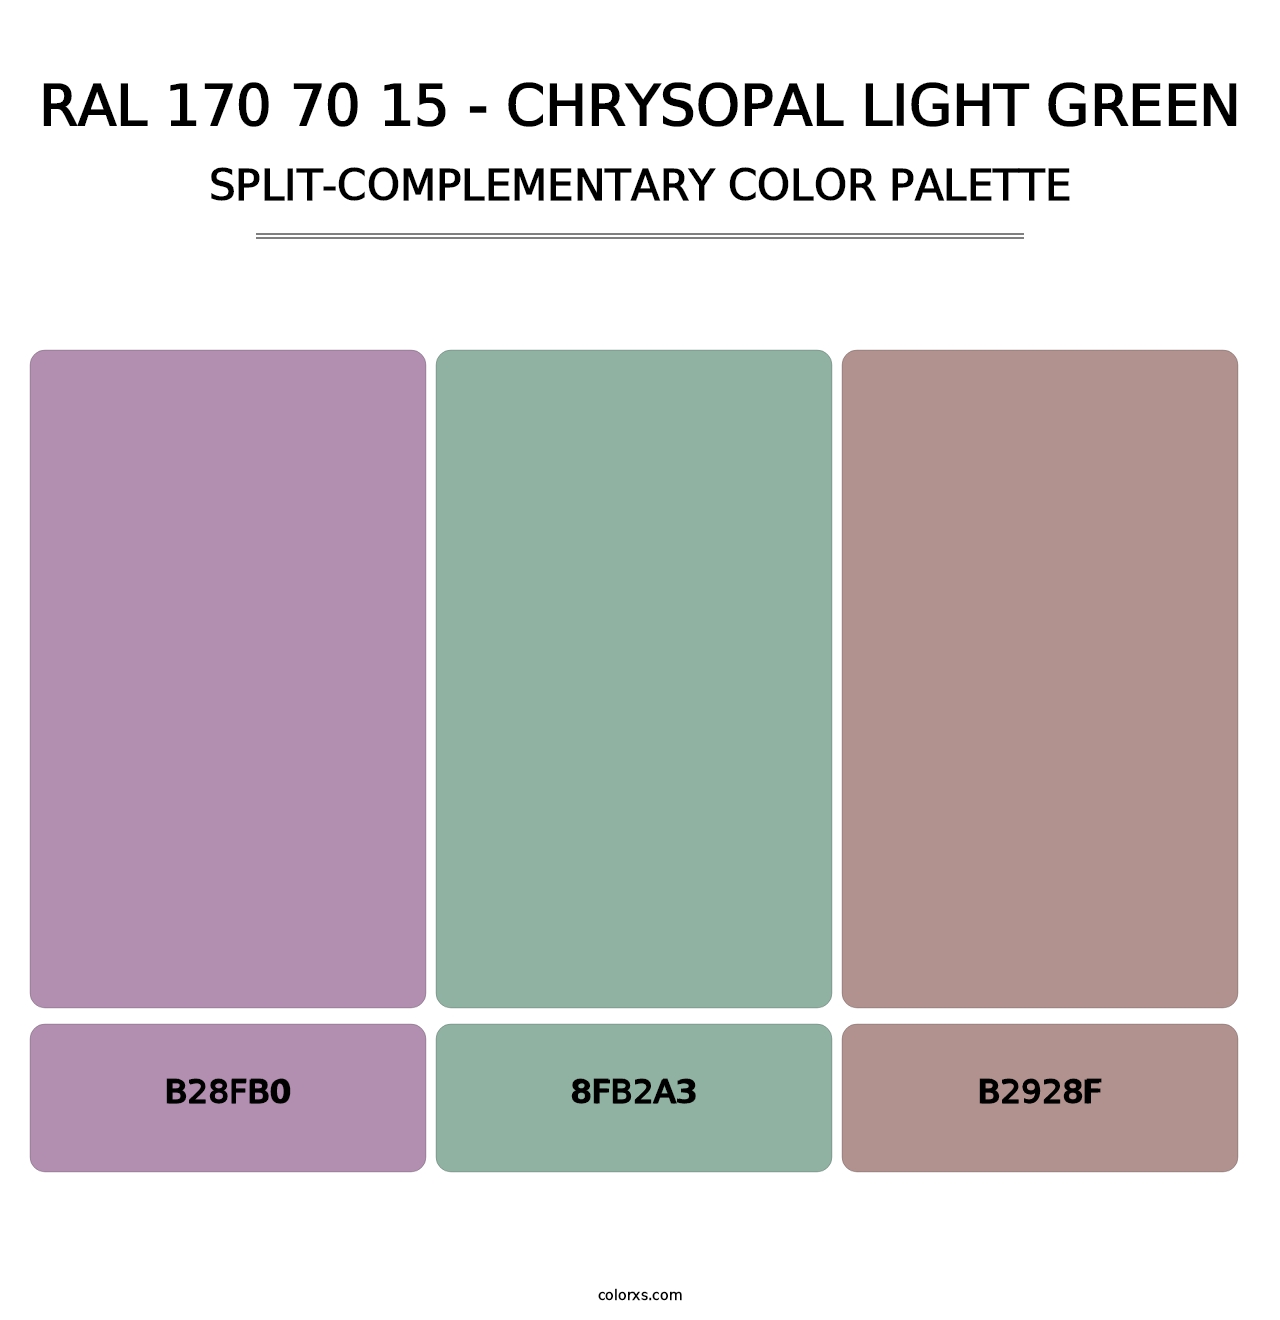 RAL 170 70 15 - Chrysopal Light Green - Split-Complementary Color Palette